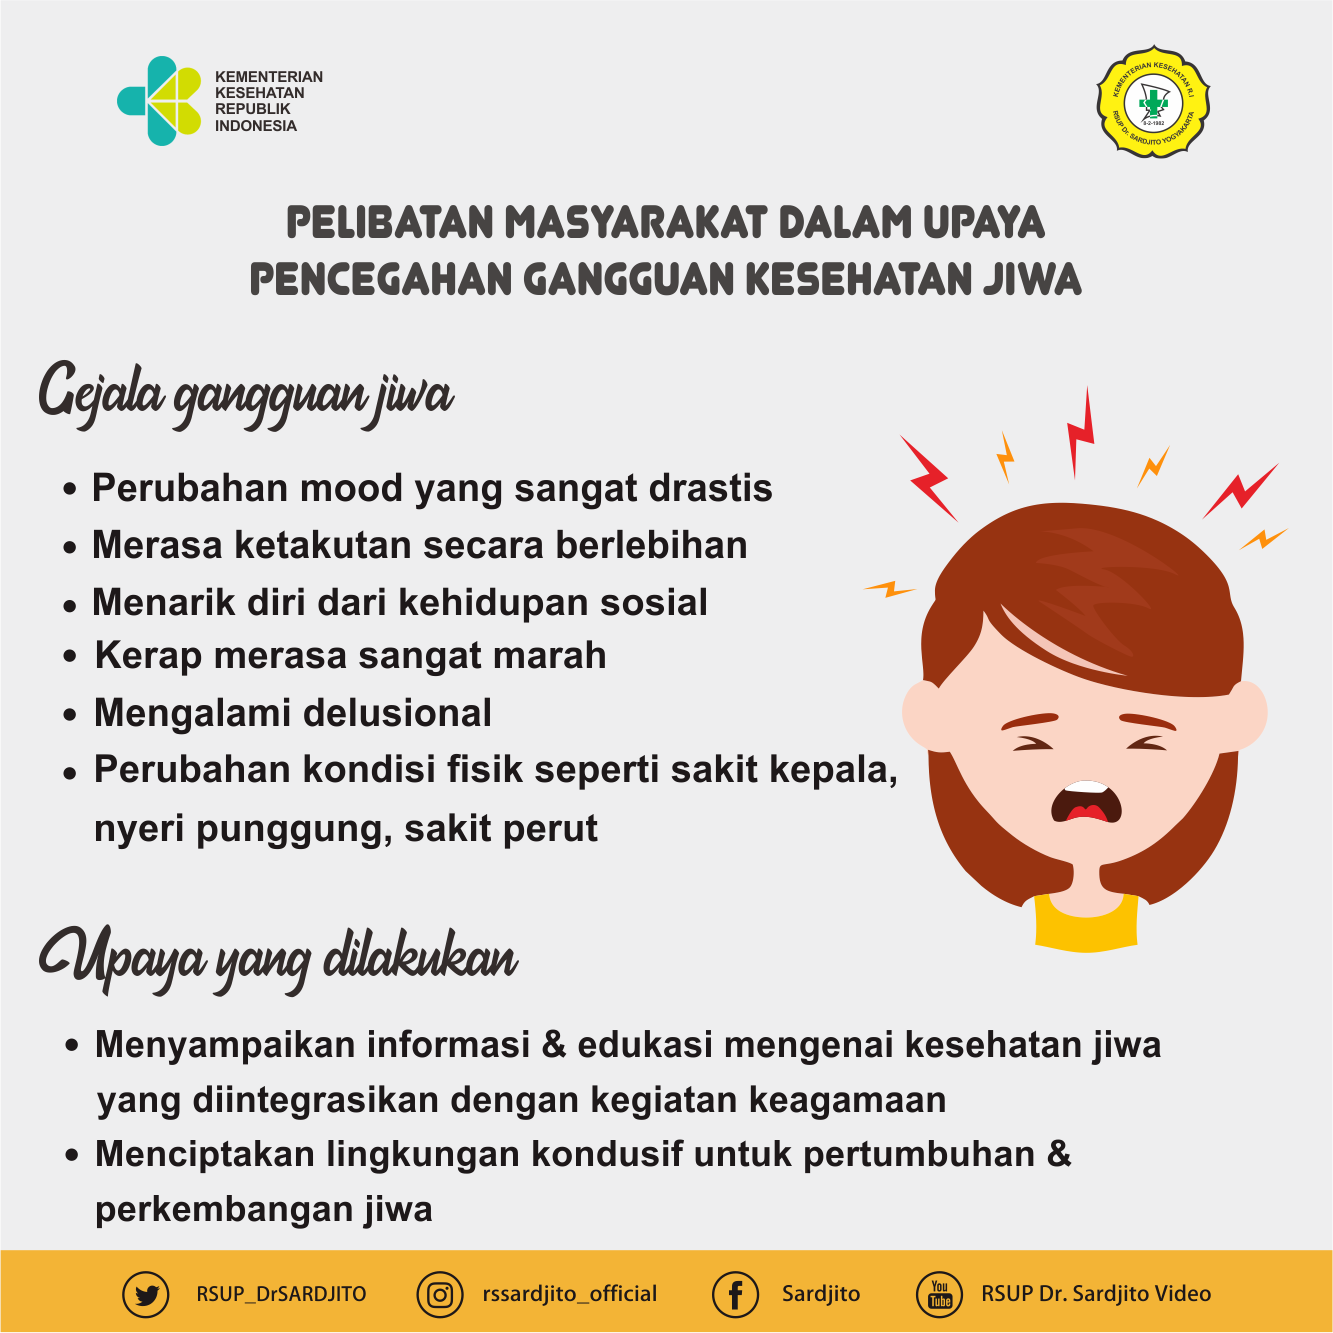 essay mental health bahasa indonesia